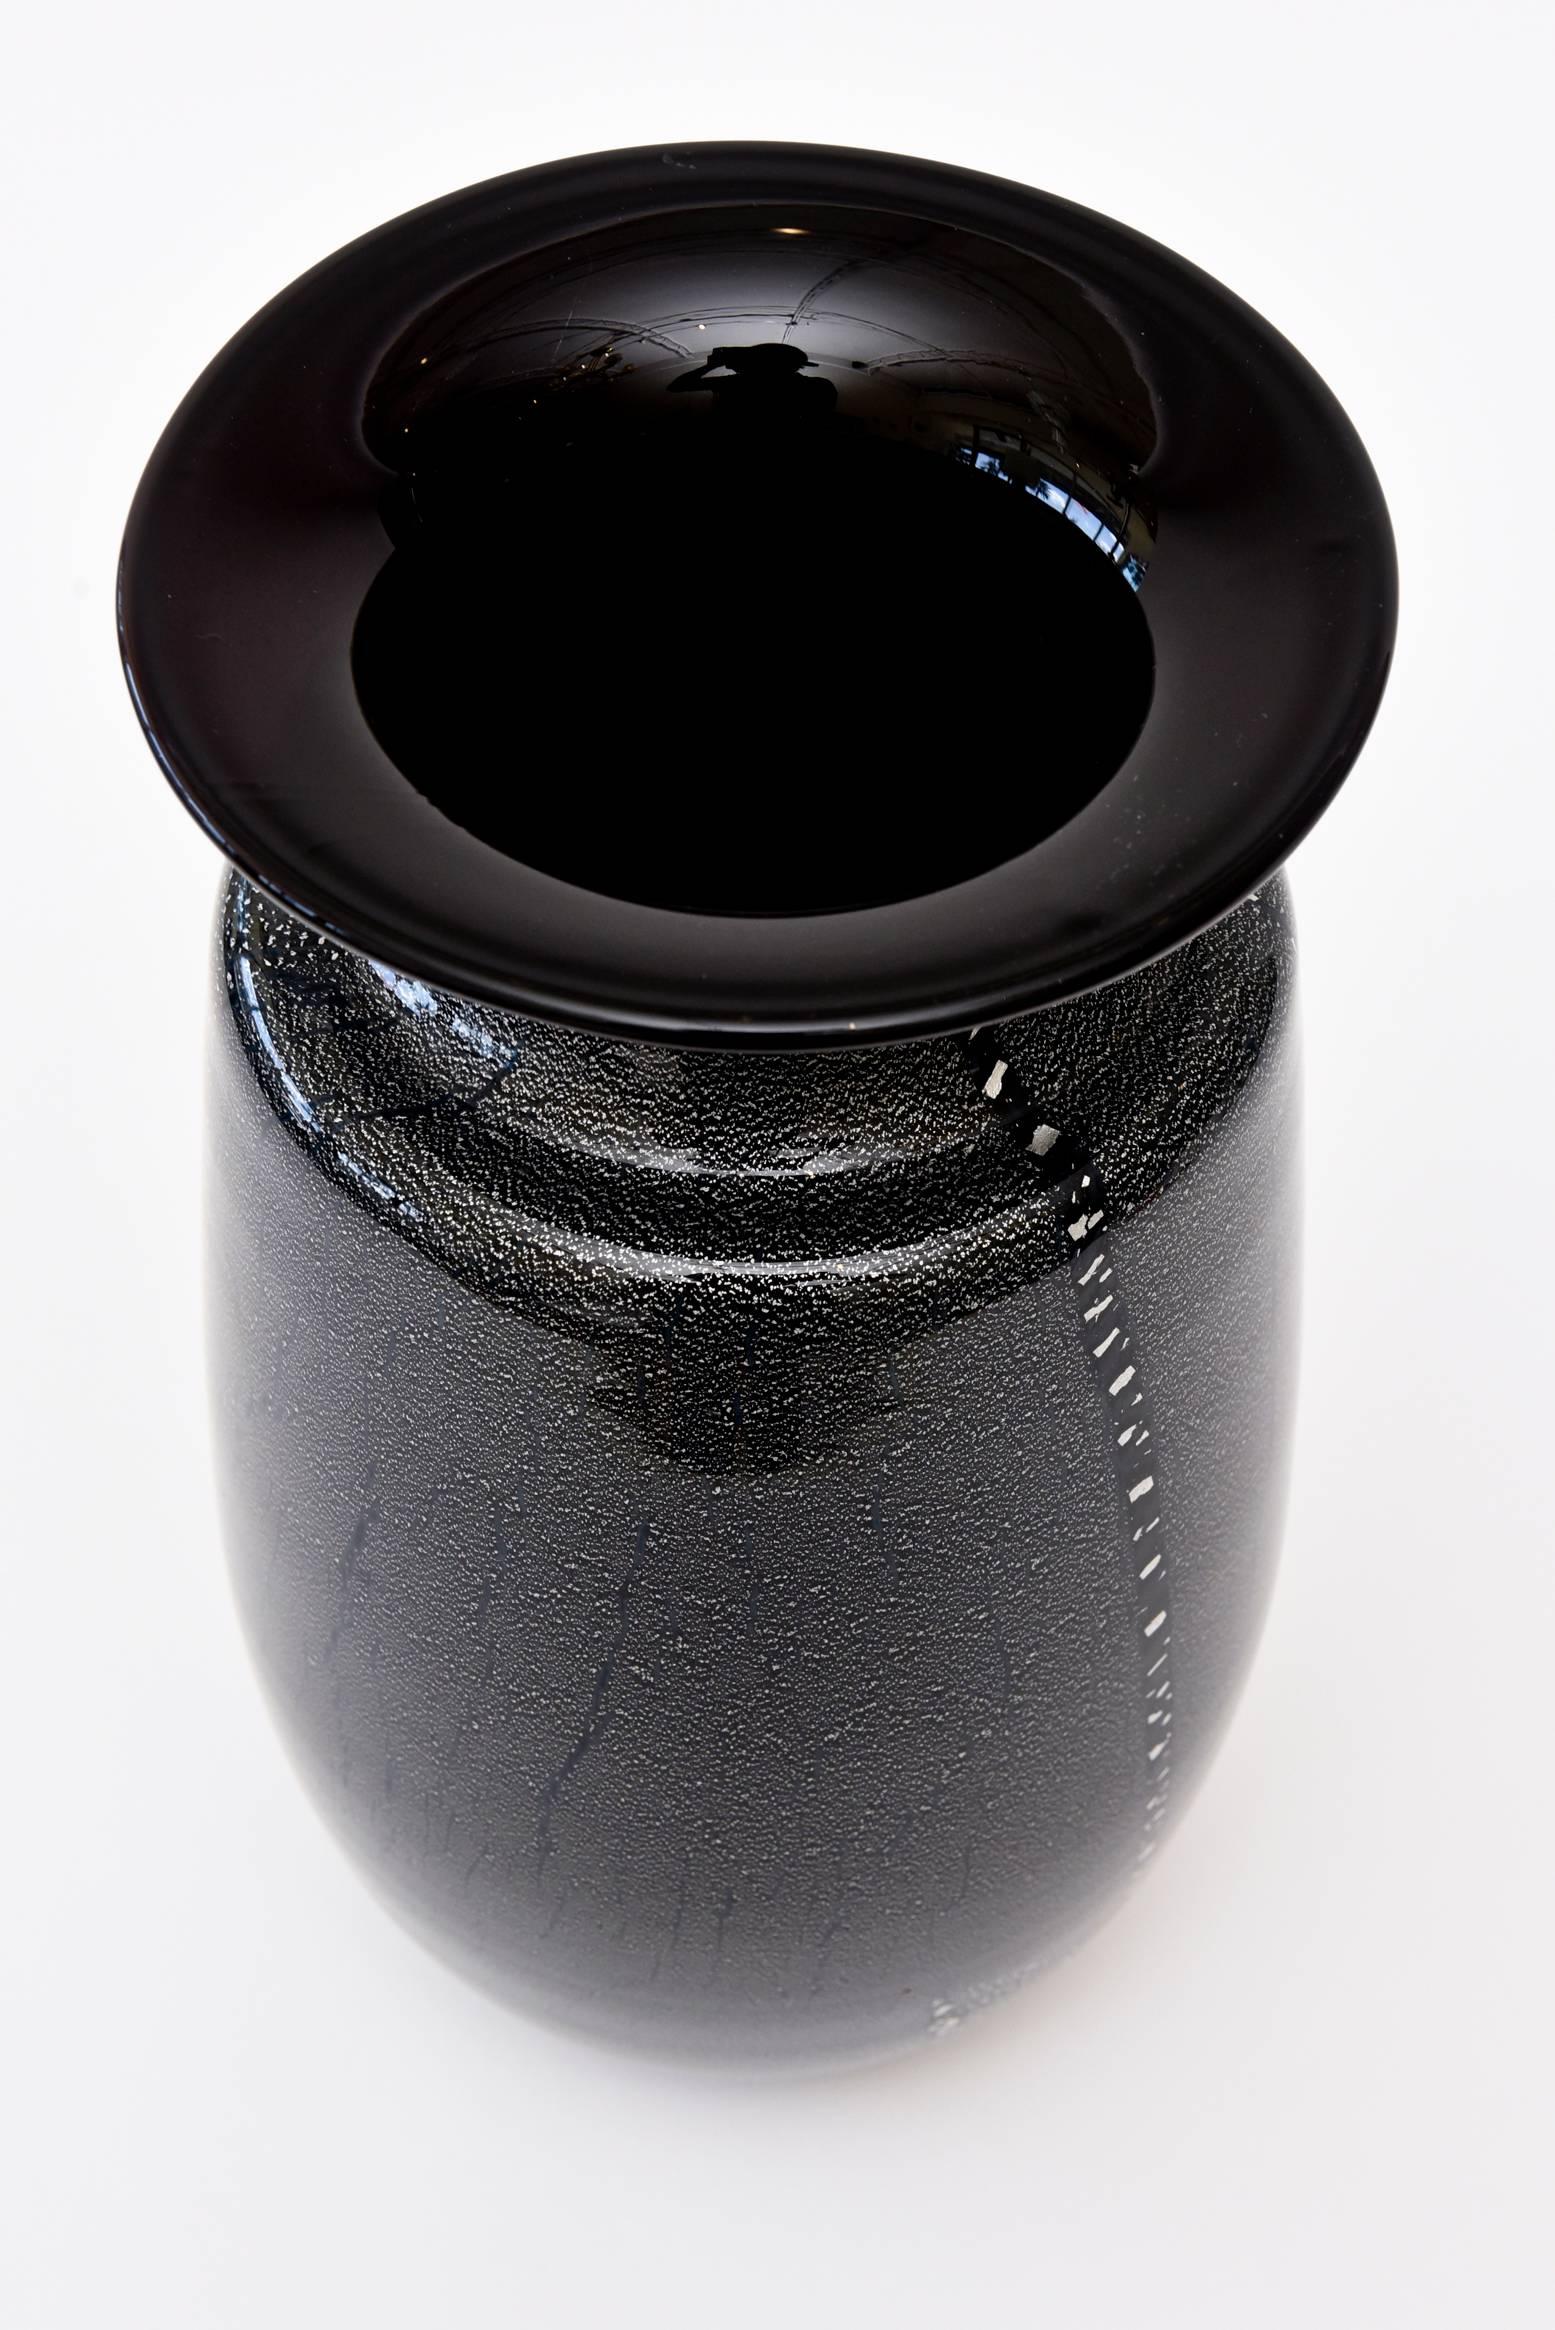 Blown Glass Italian Murano Seguso Black Amethyst and Silver Foil Large Vase or Vessel /SALE